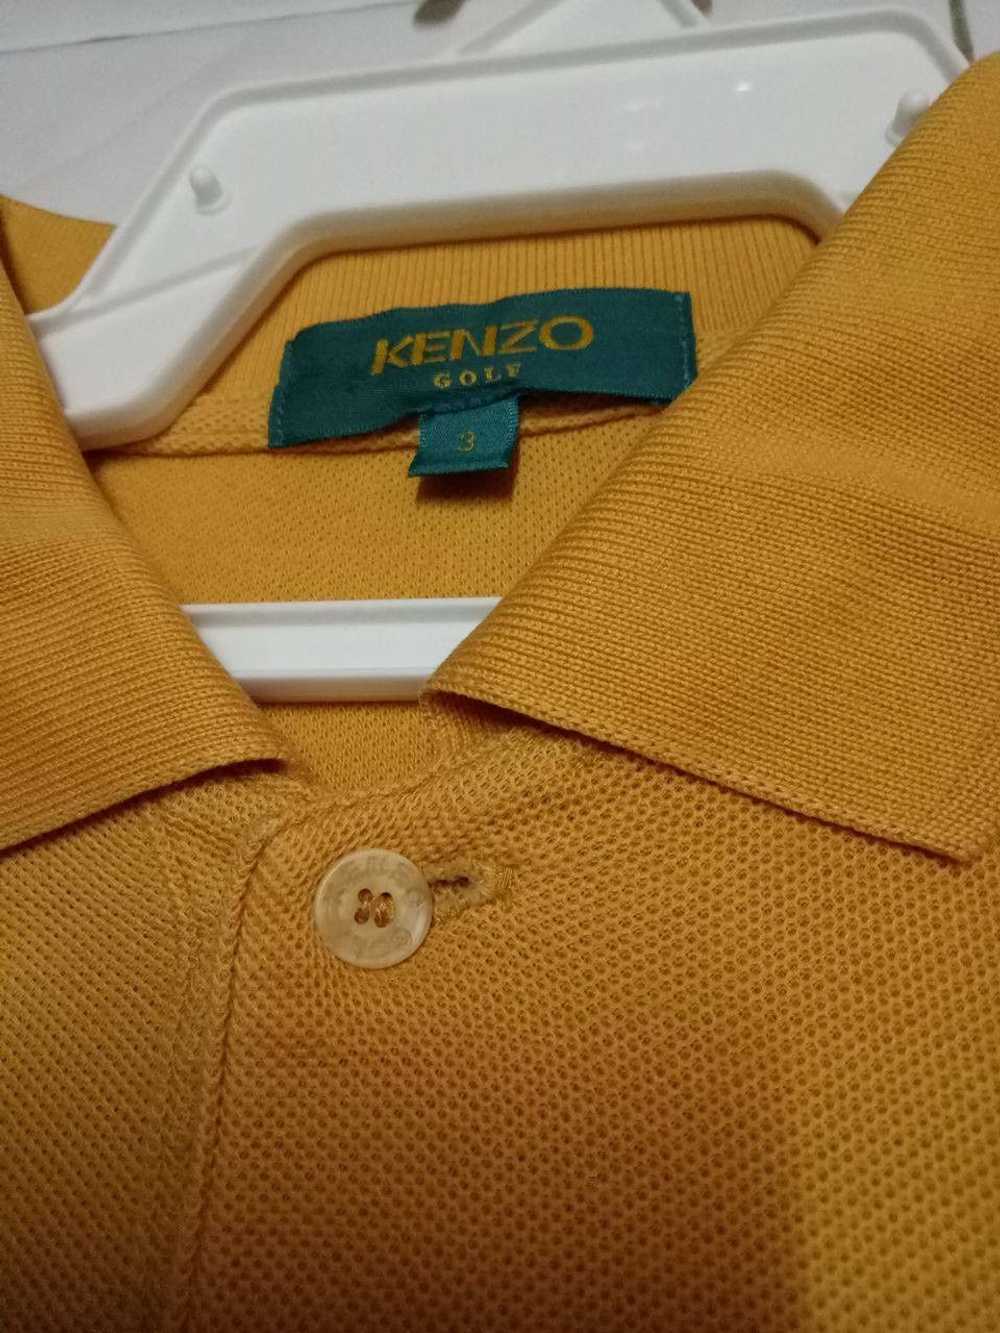 Kenzo KENZO GOLF Polo Ringer Short Sleeve Shirt - image 3